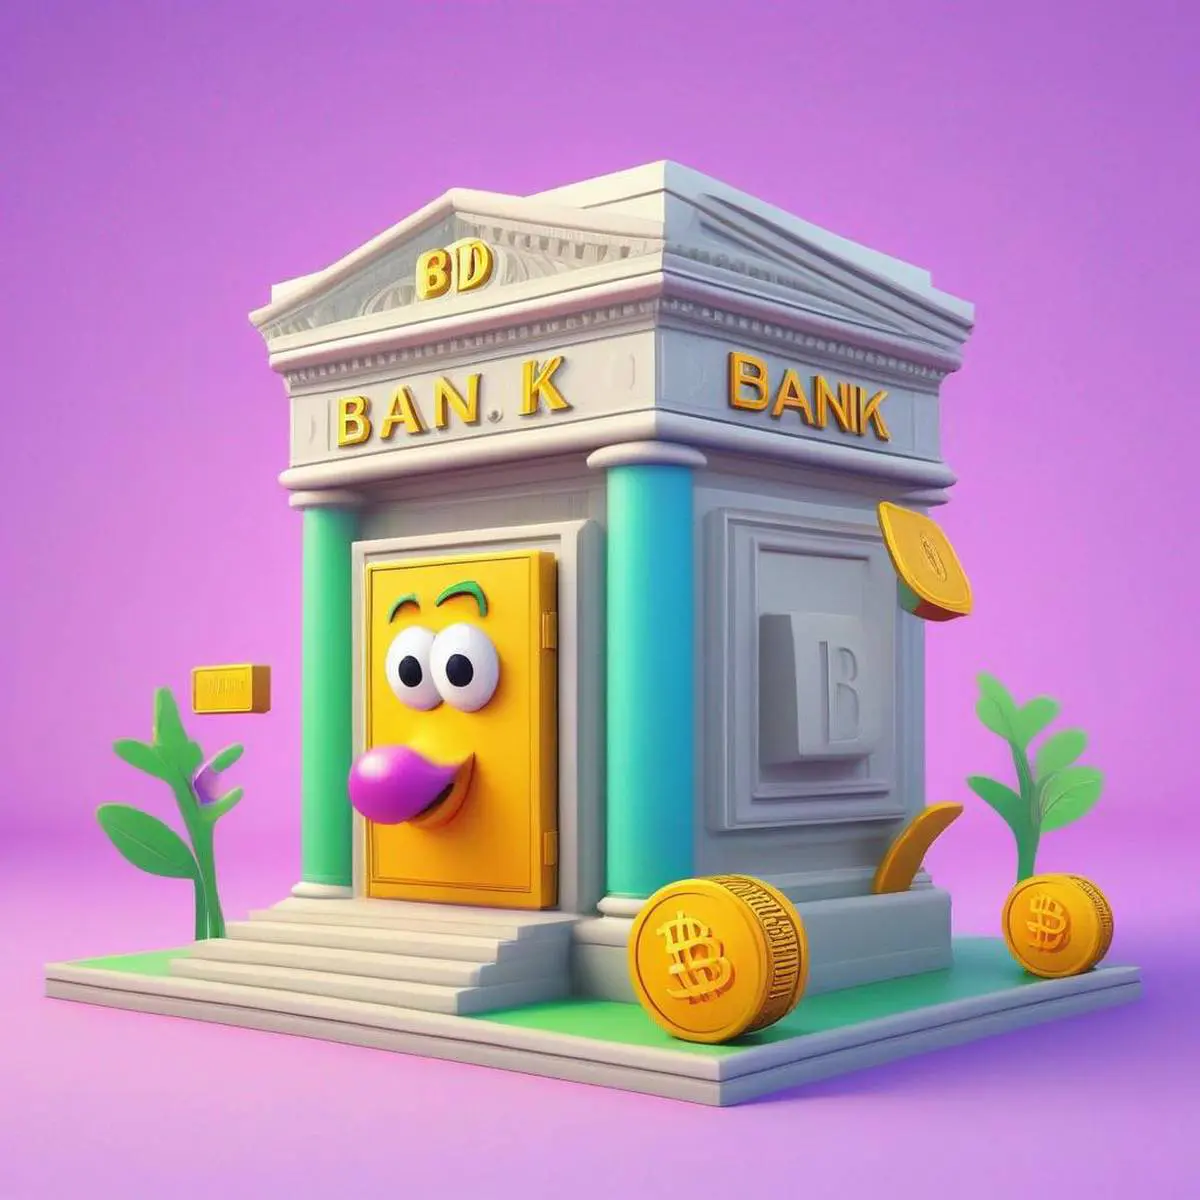 Bank puns